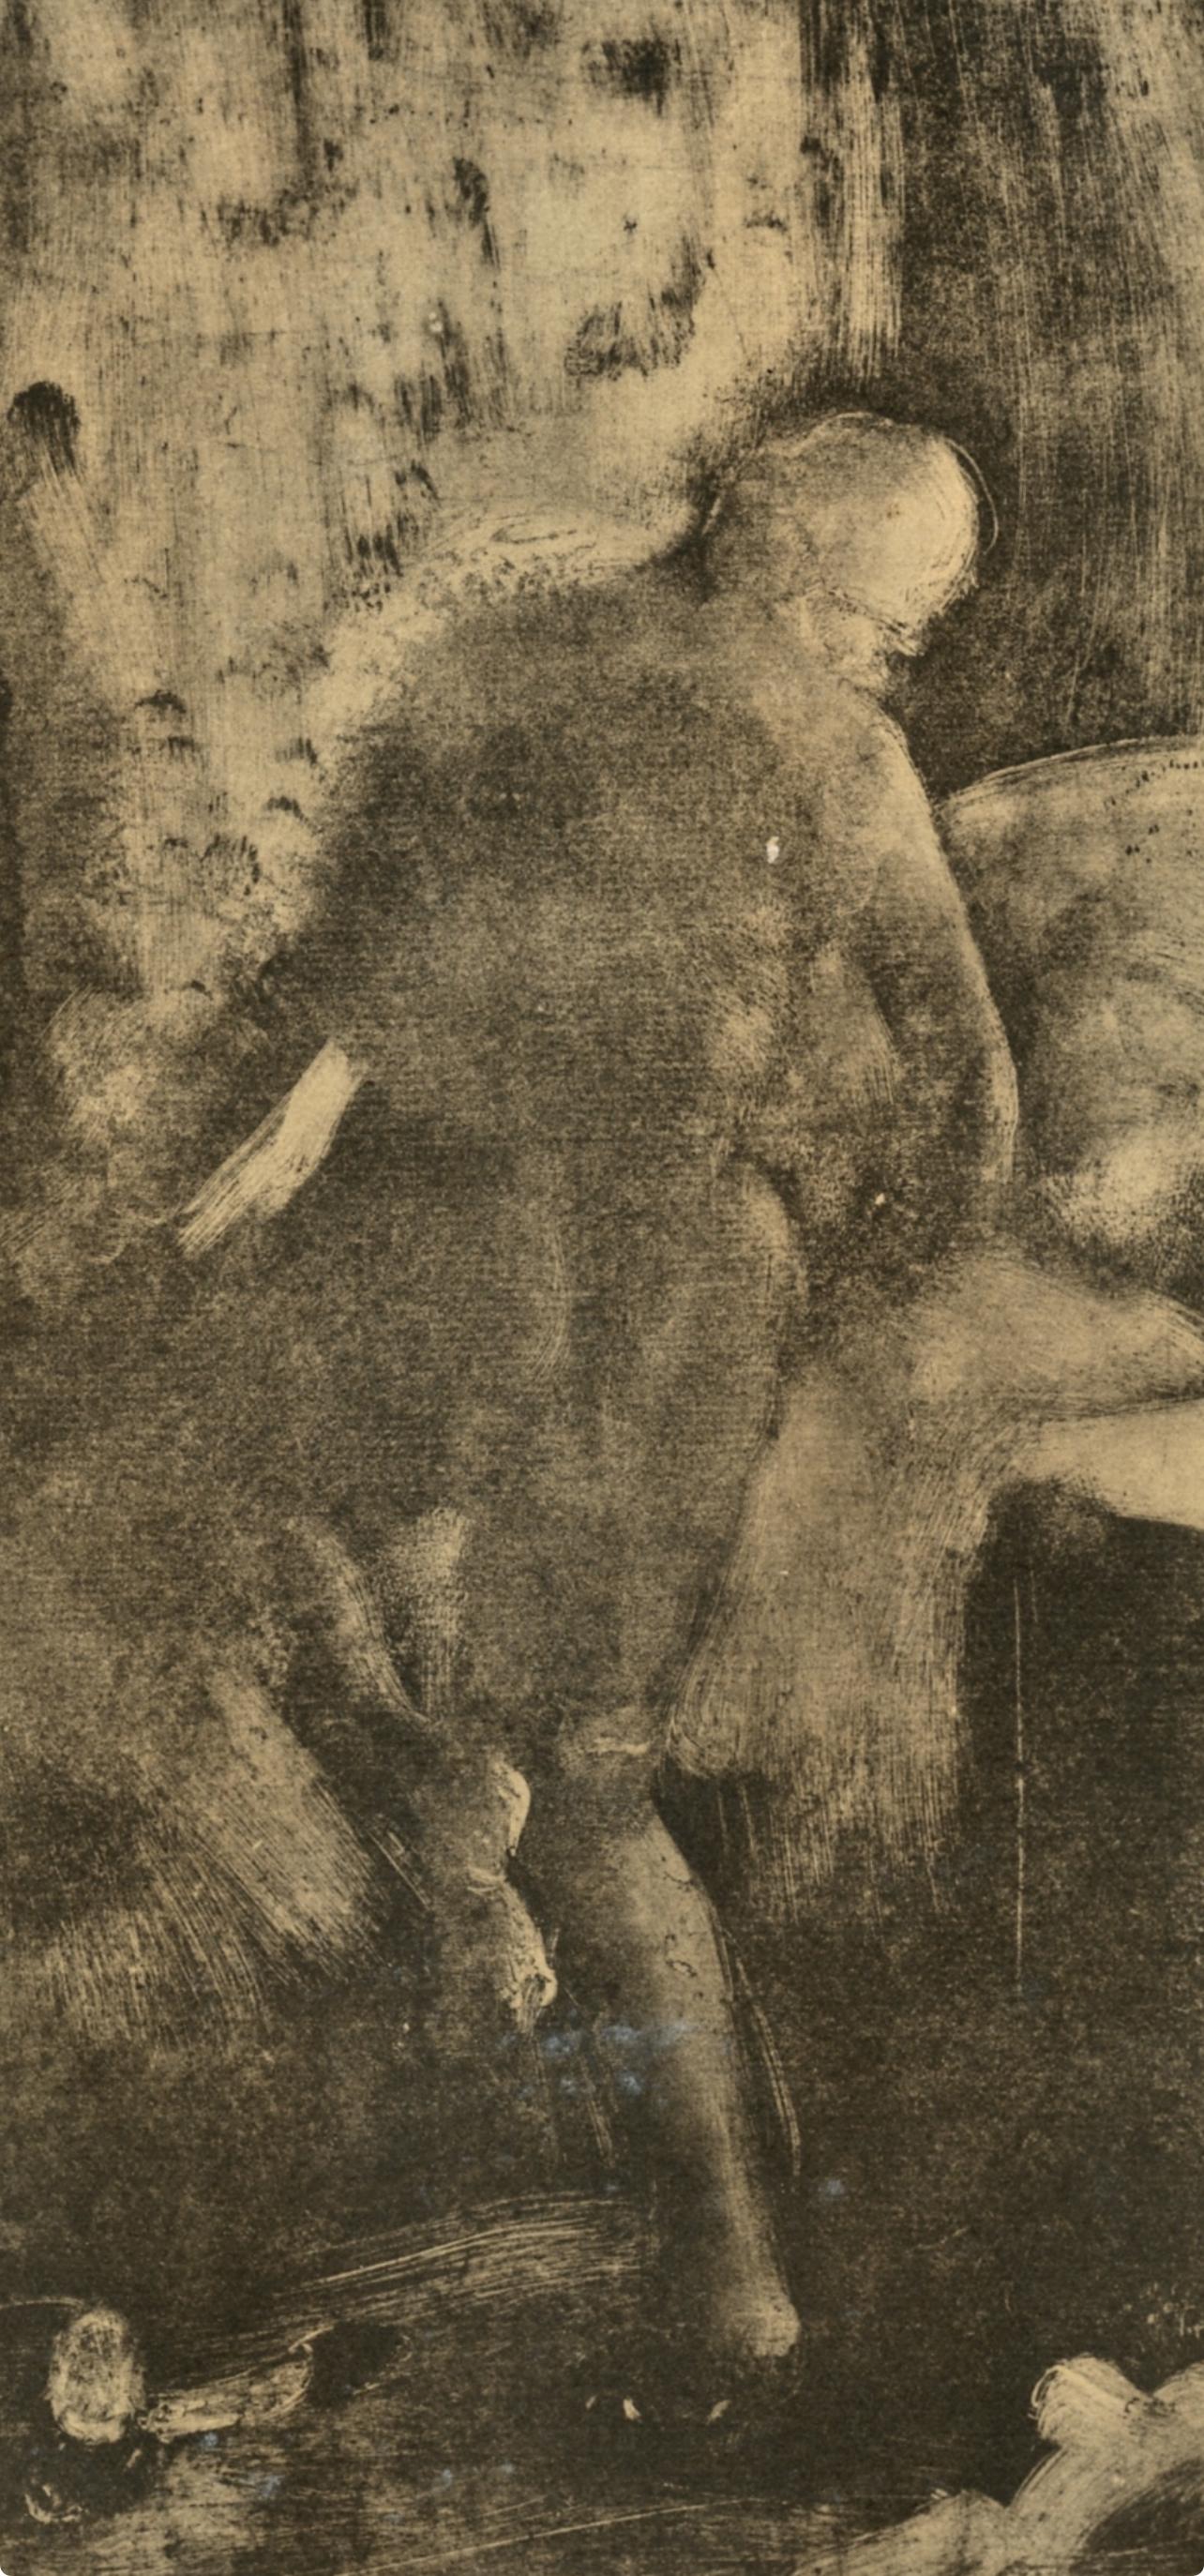 Degas, Le Coucher, Les Monotypes (after) - Print by Edgar Degas